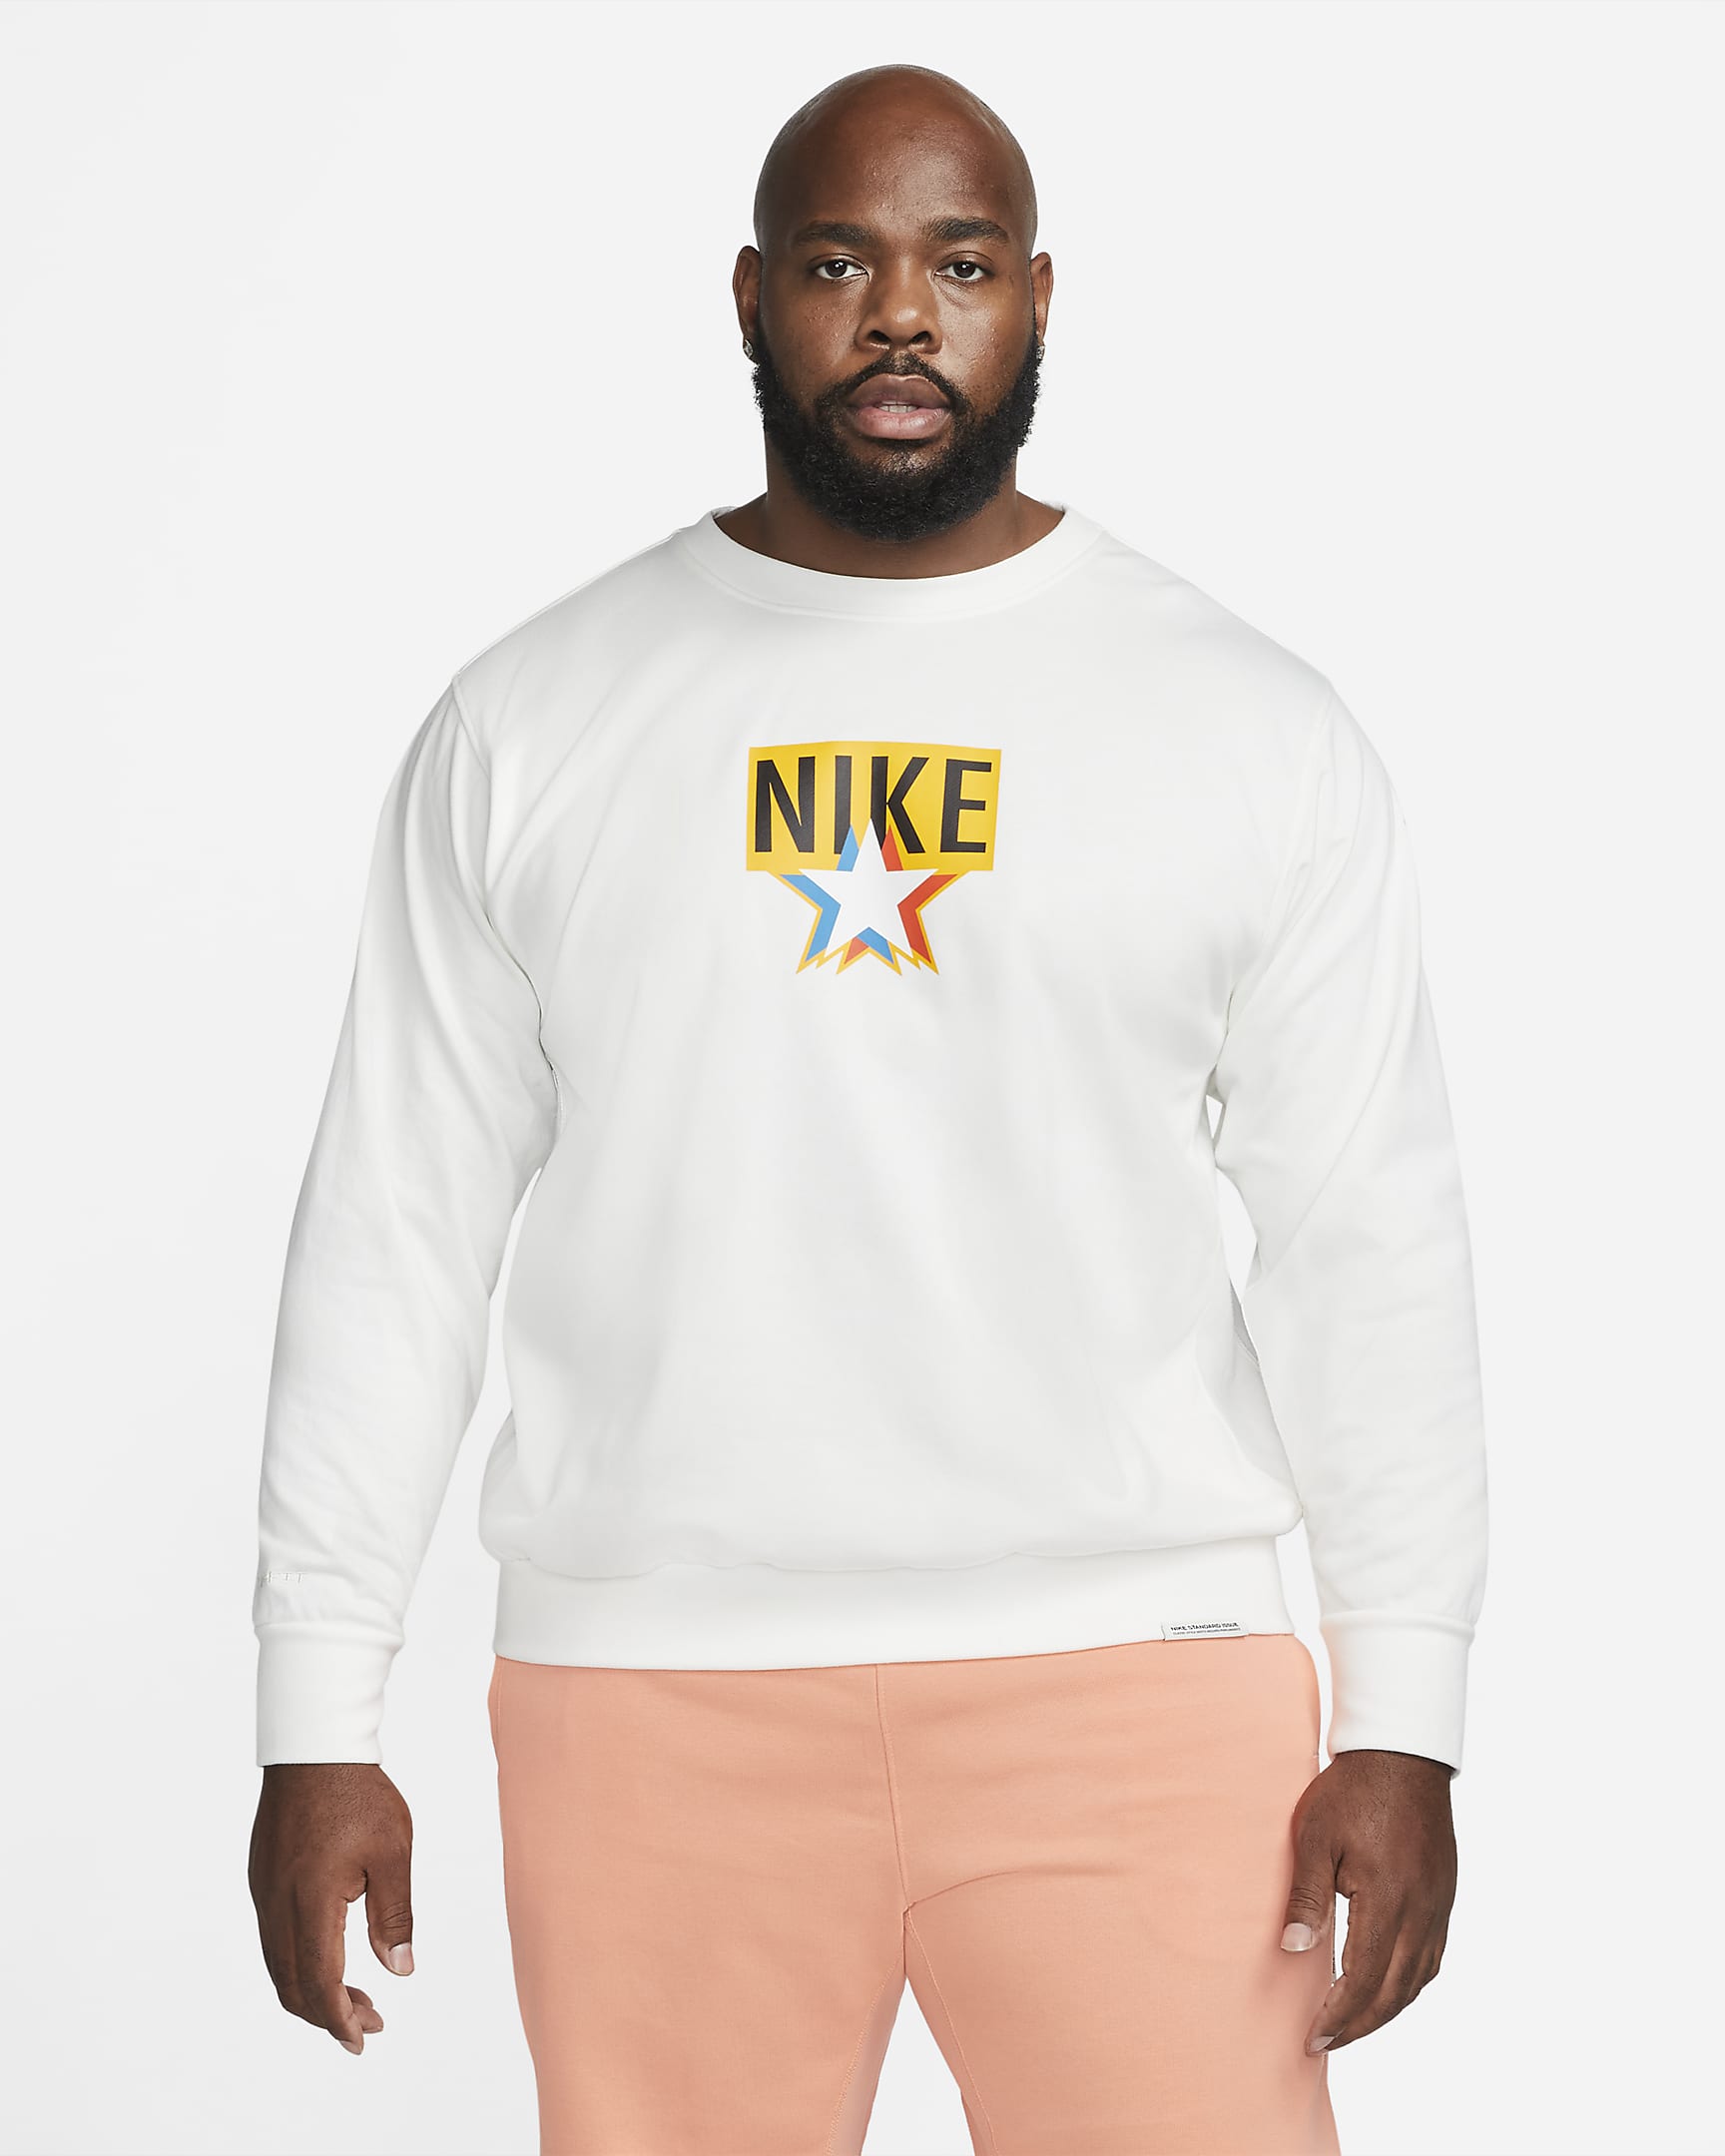 nike-standard-issue-mens-basketball-crew-sweatshirt-5K6rh1-2.png